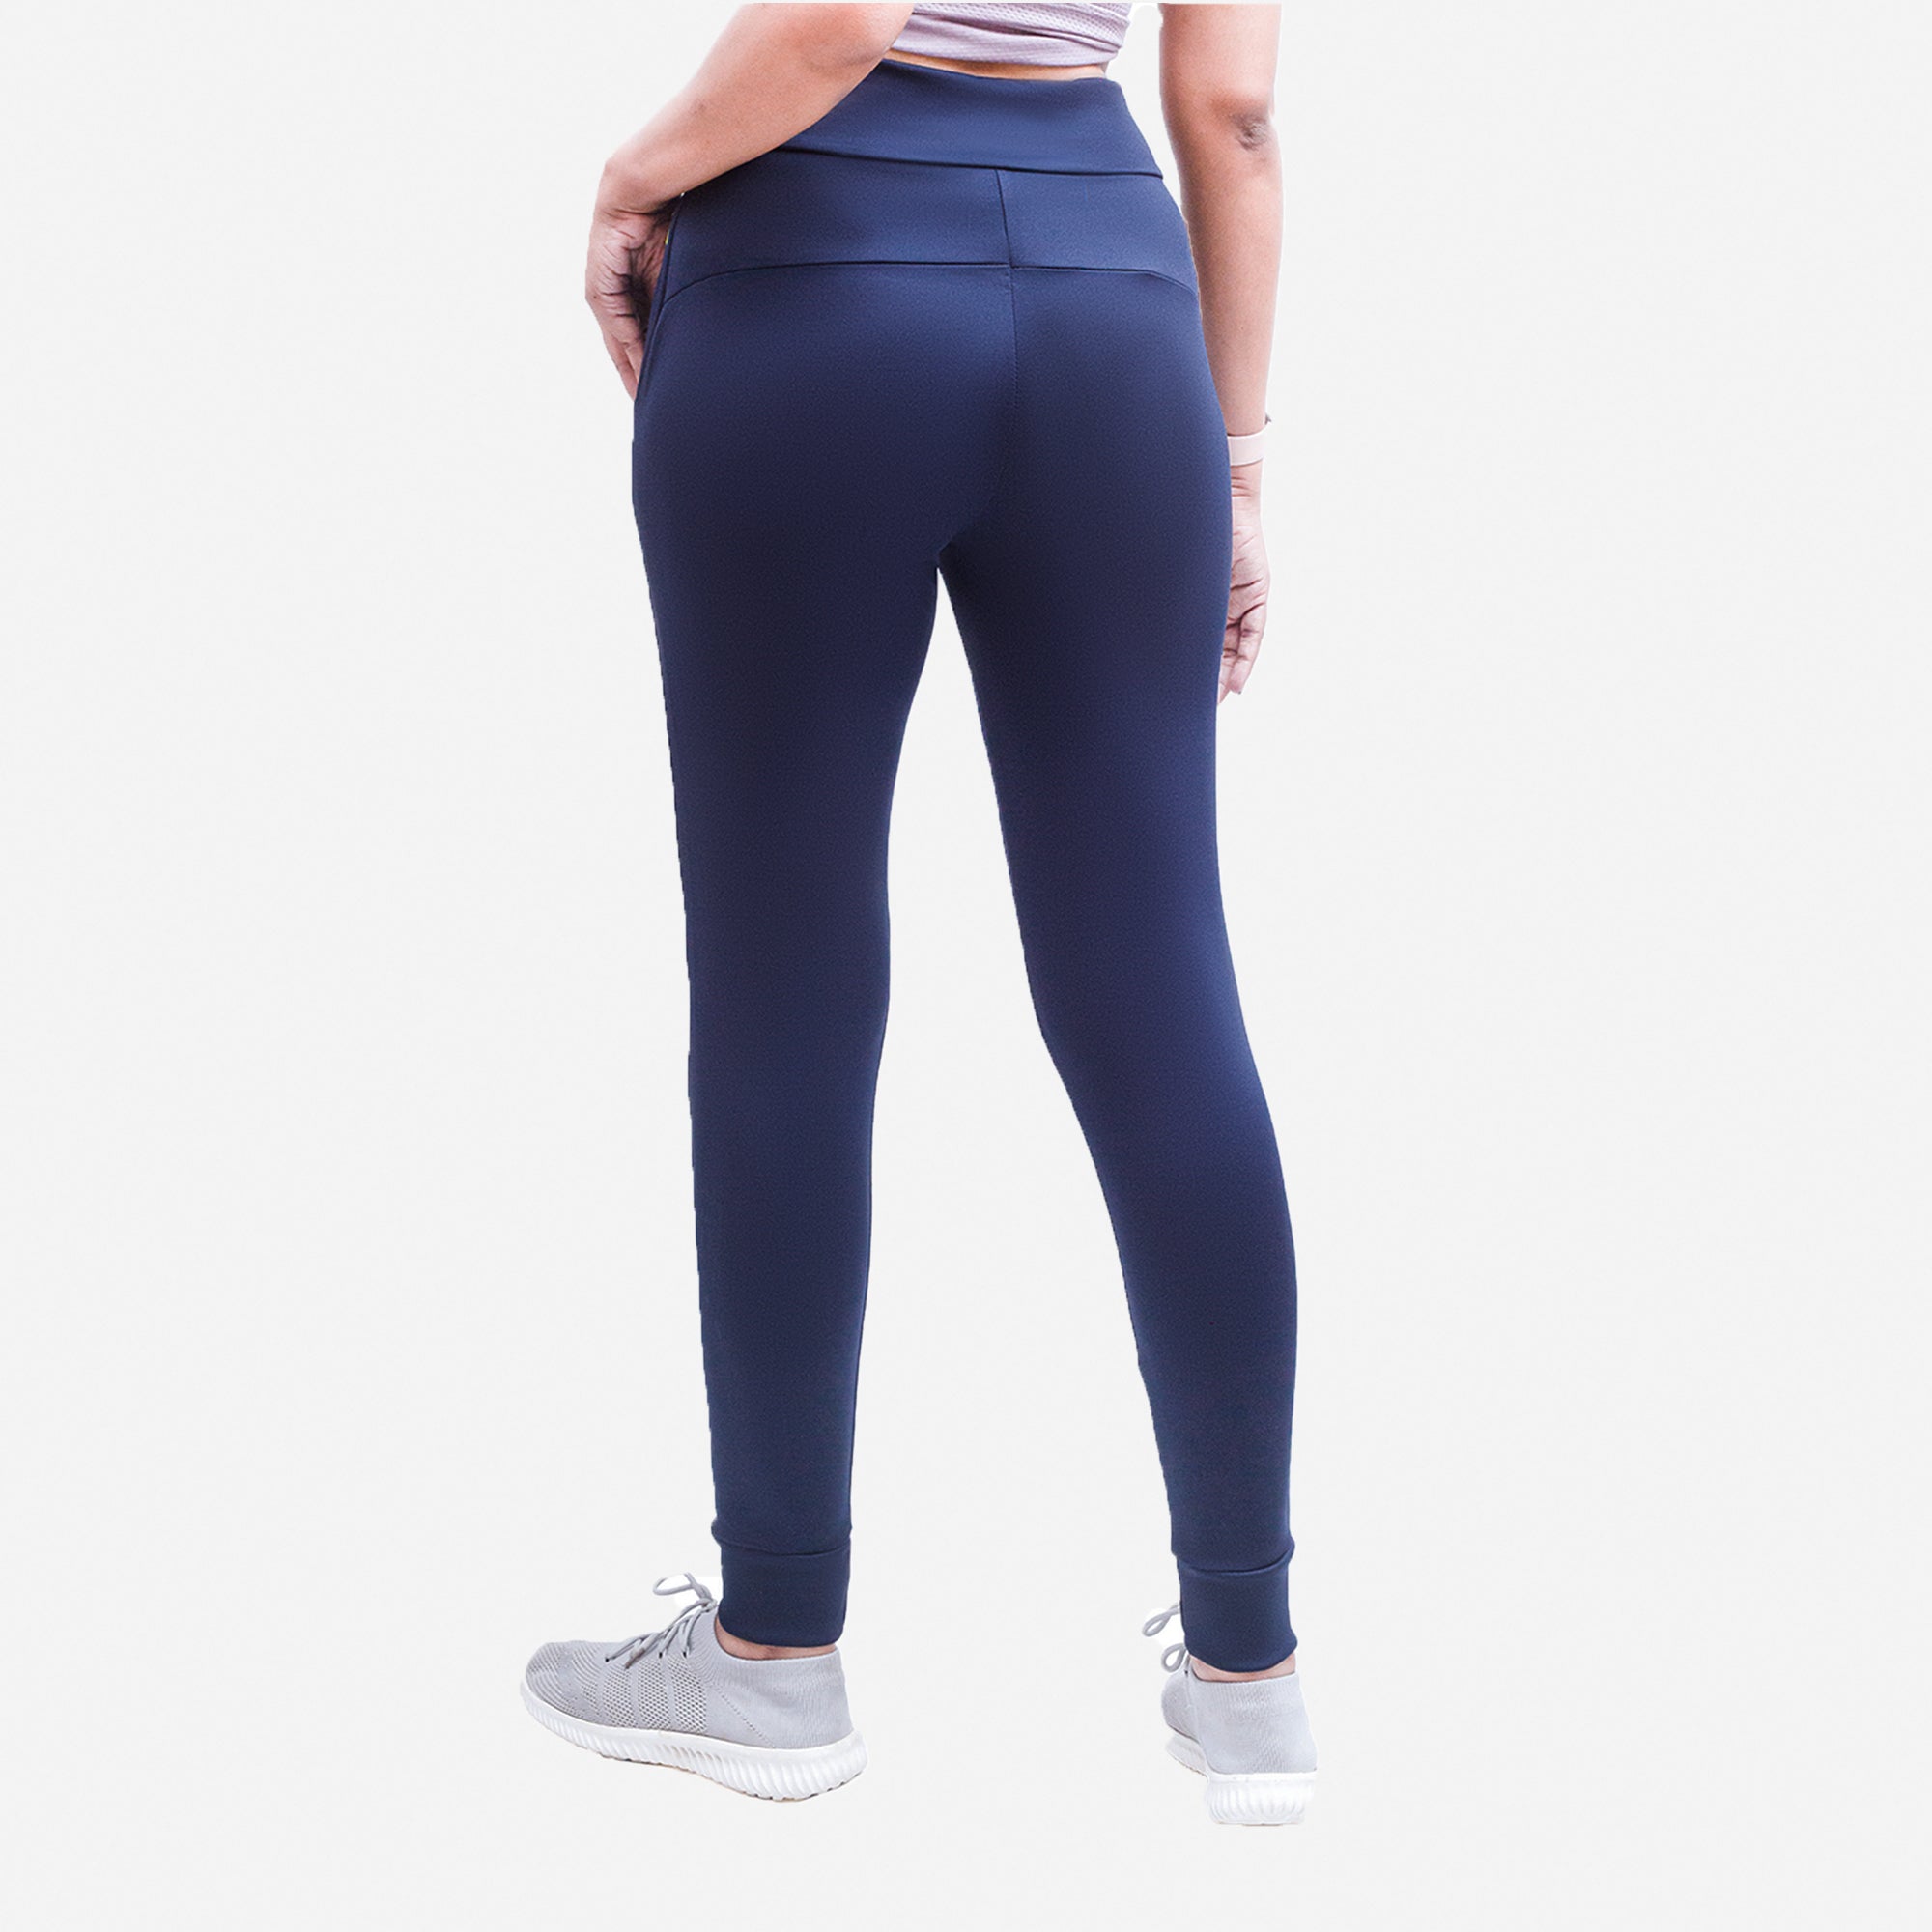 Women’s Joggers Pants, Workout Yoga Athletic Leggings - NavyBlue